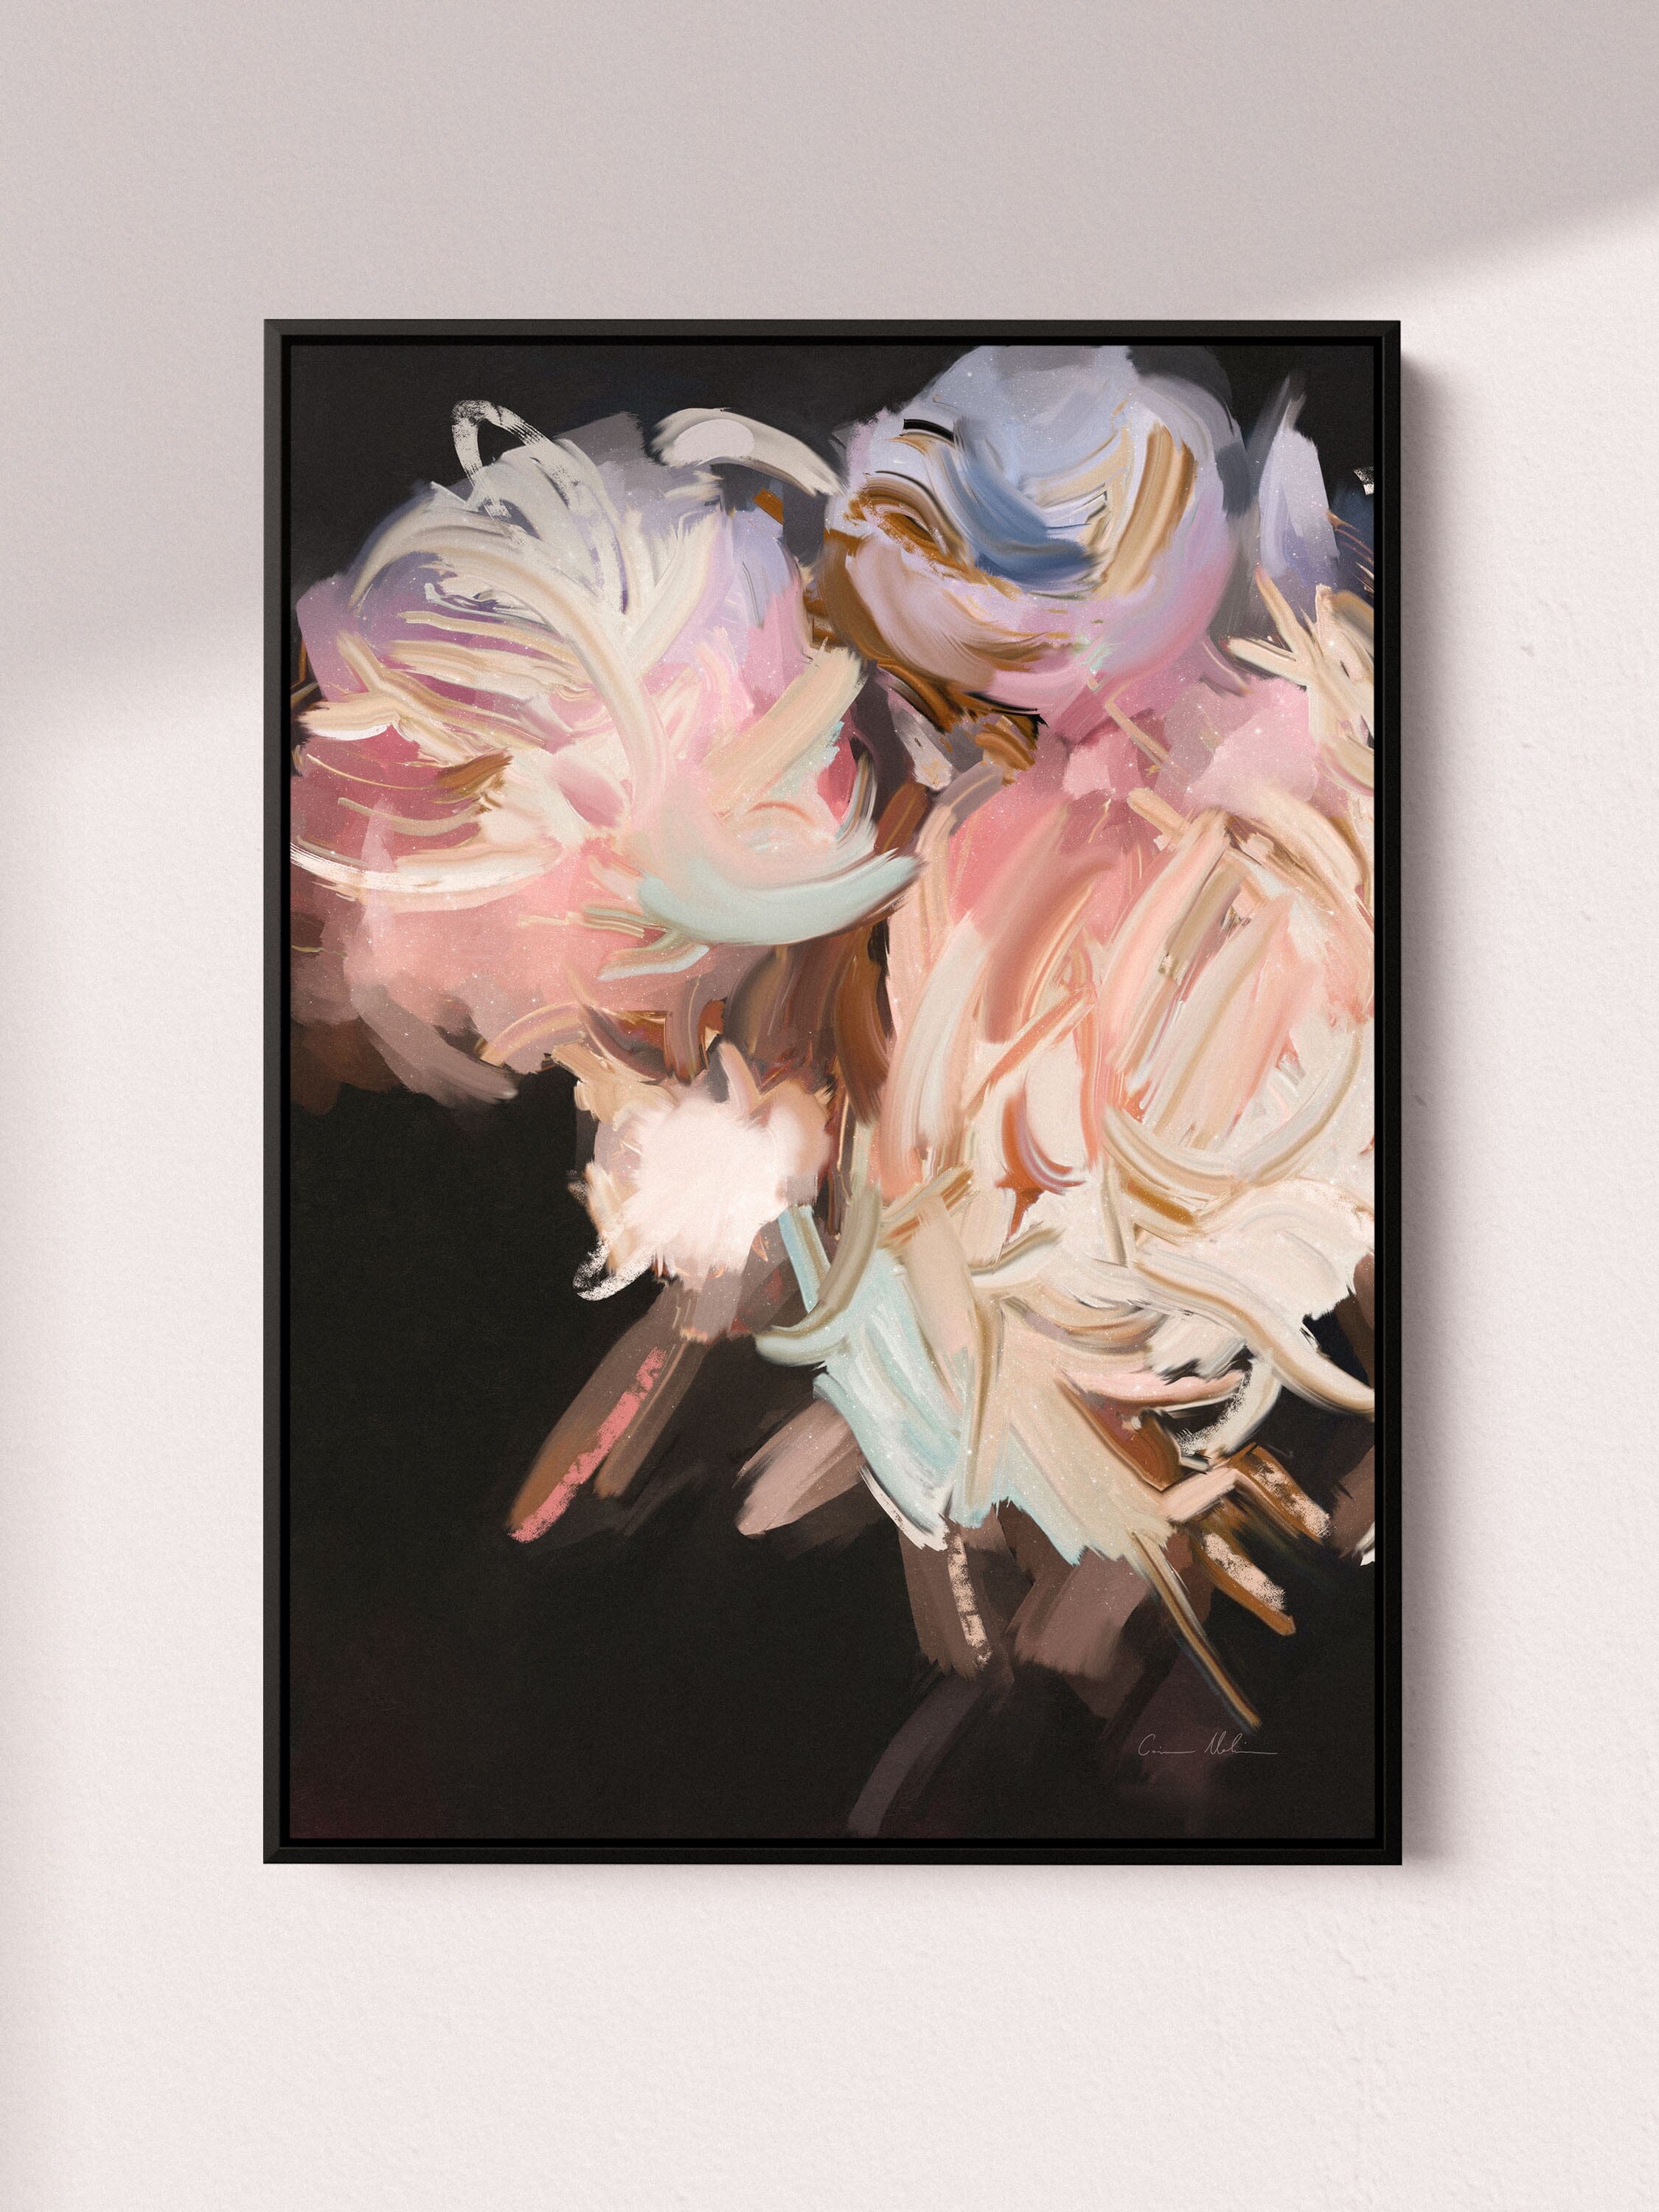 "Florence" on Canvas - Portrait Canvas Wall Art Corinne Melanie Art Professionally Framed - Black 24x32in / 60x80cm 